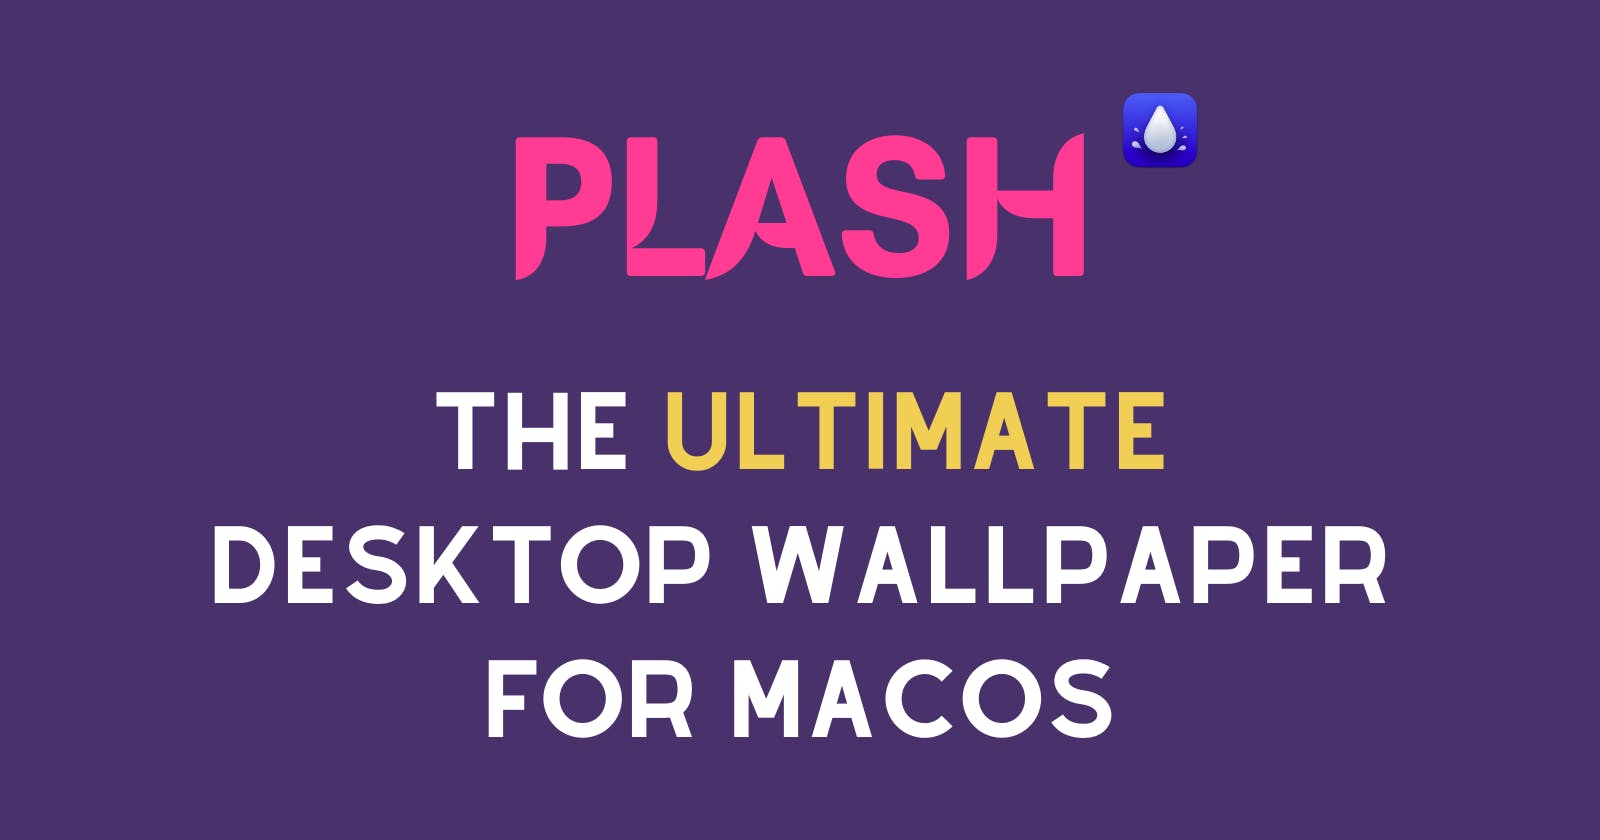 Plash - The Ultimate Desktop Wallpaper for macOS